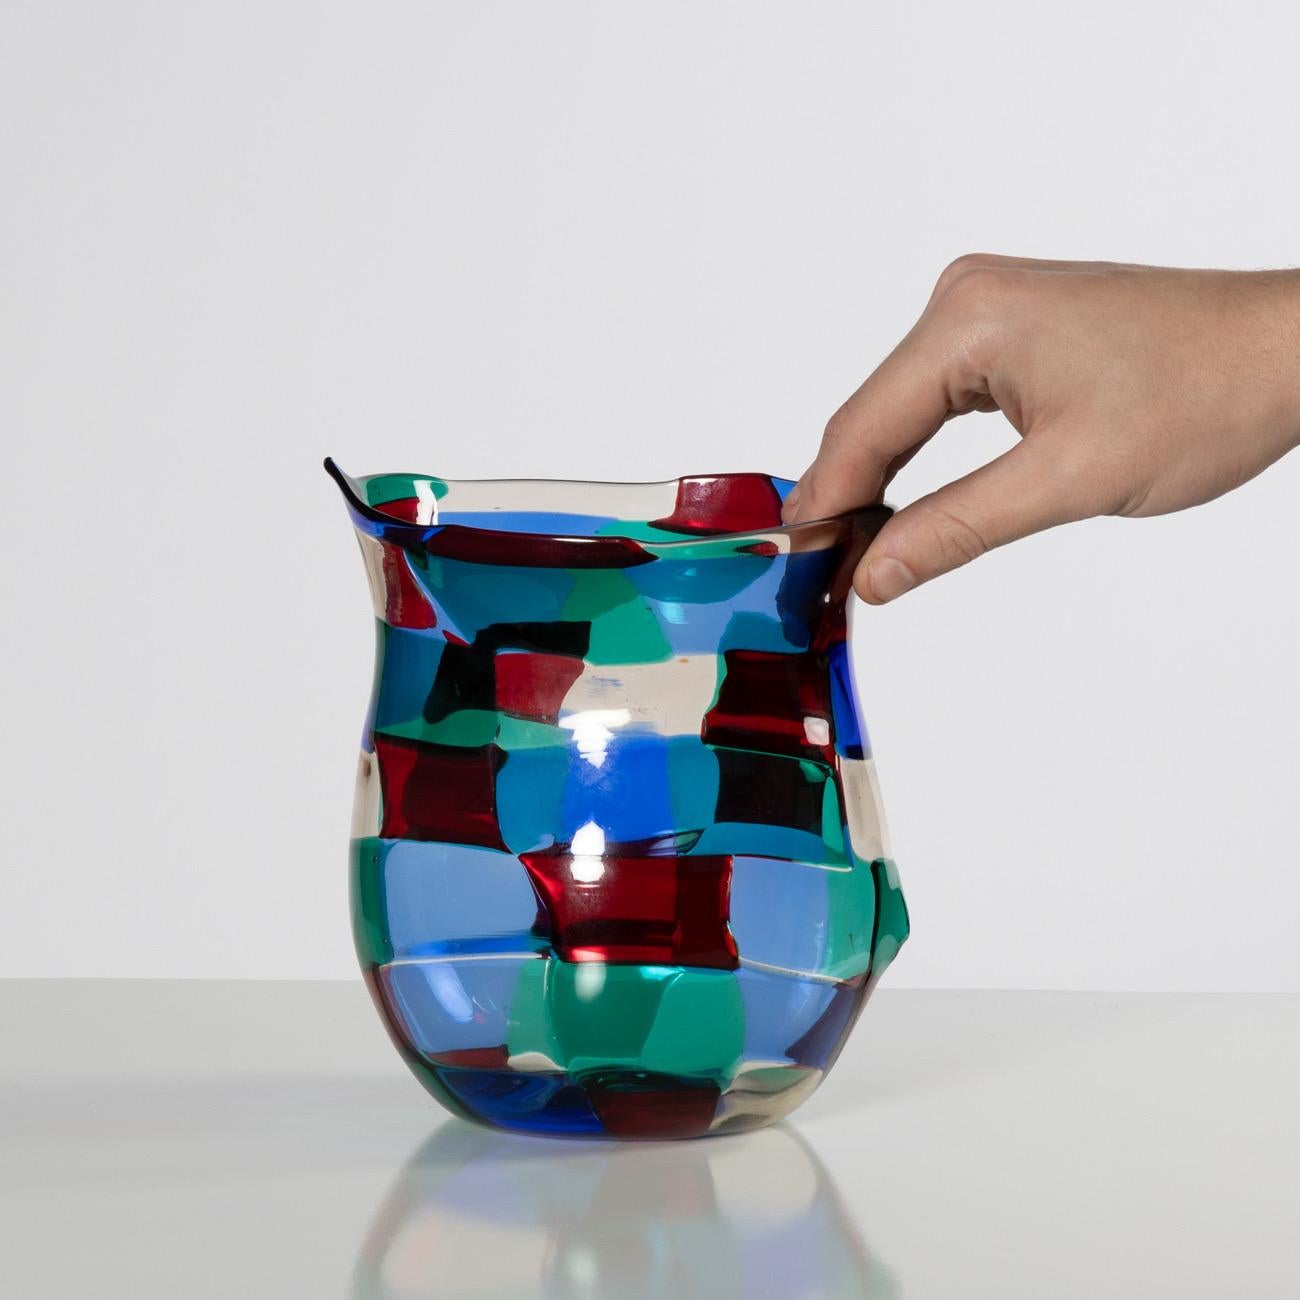 Blown Glass Fulvio Bianconi, “Horned” Pezzato Vase in “Paris” Color Variation, Venini Murano